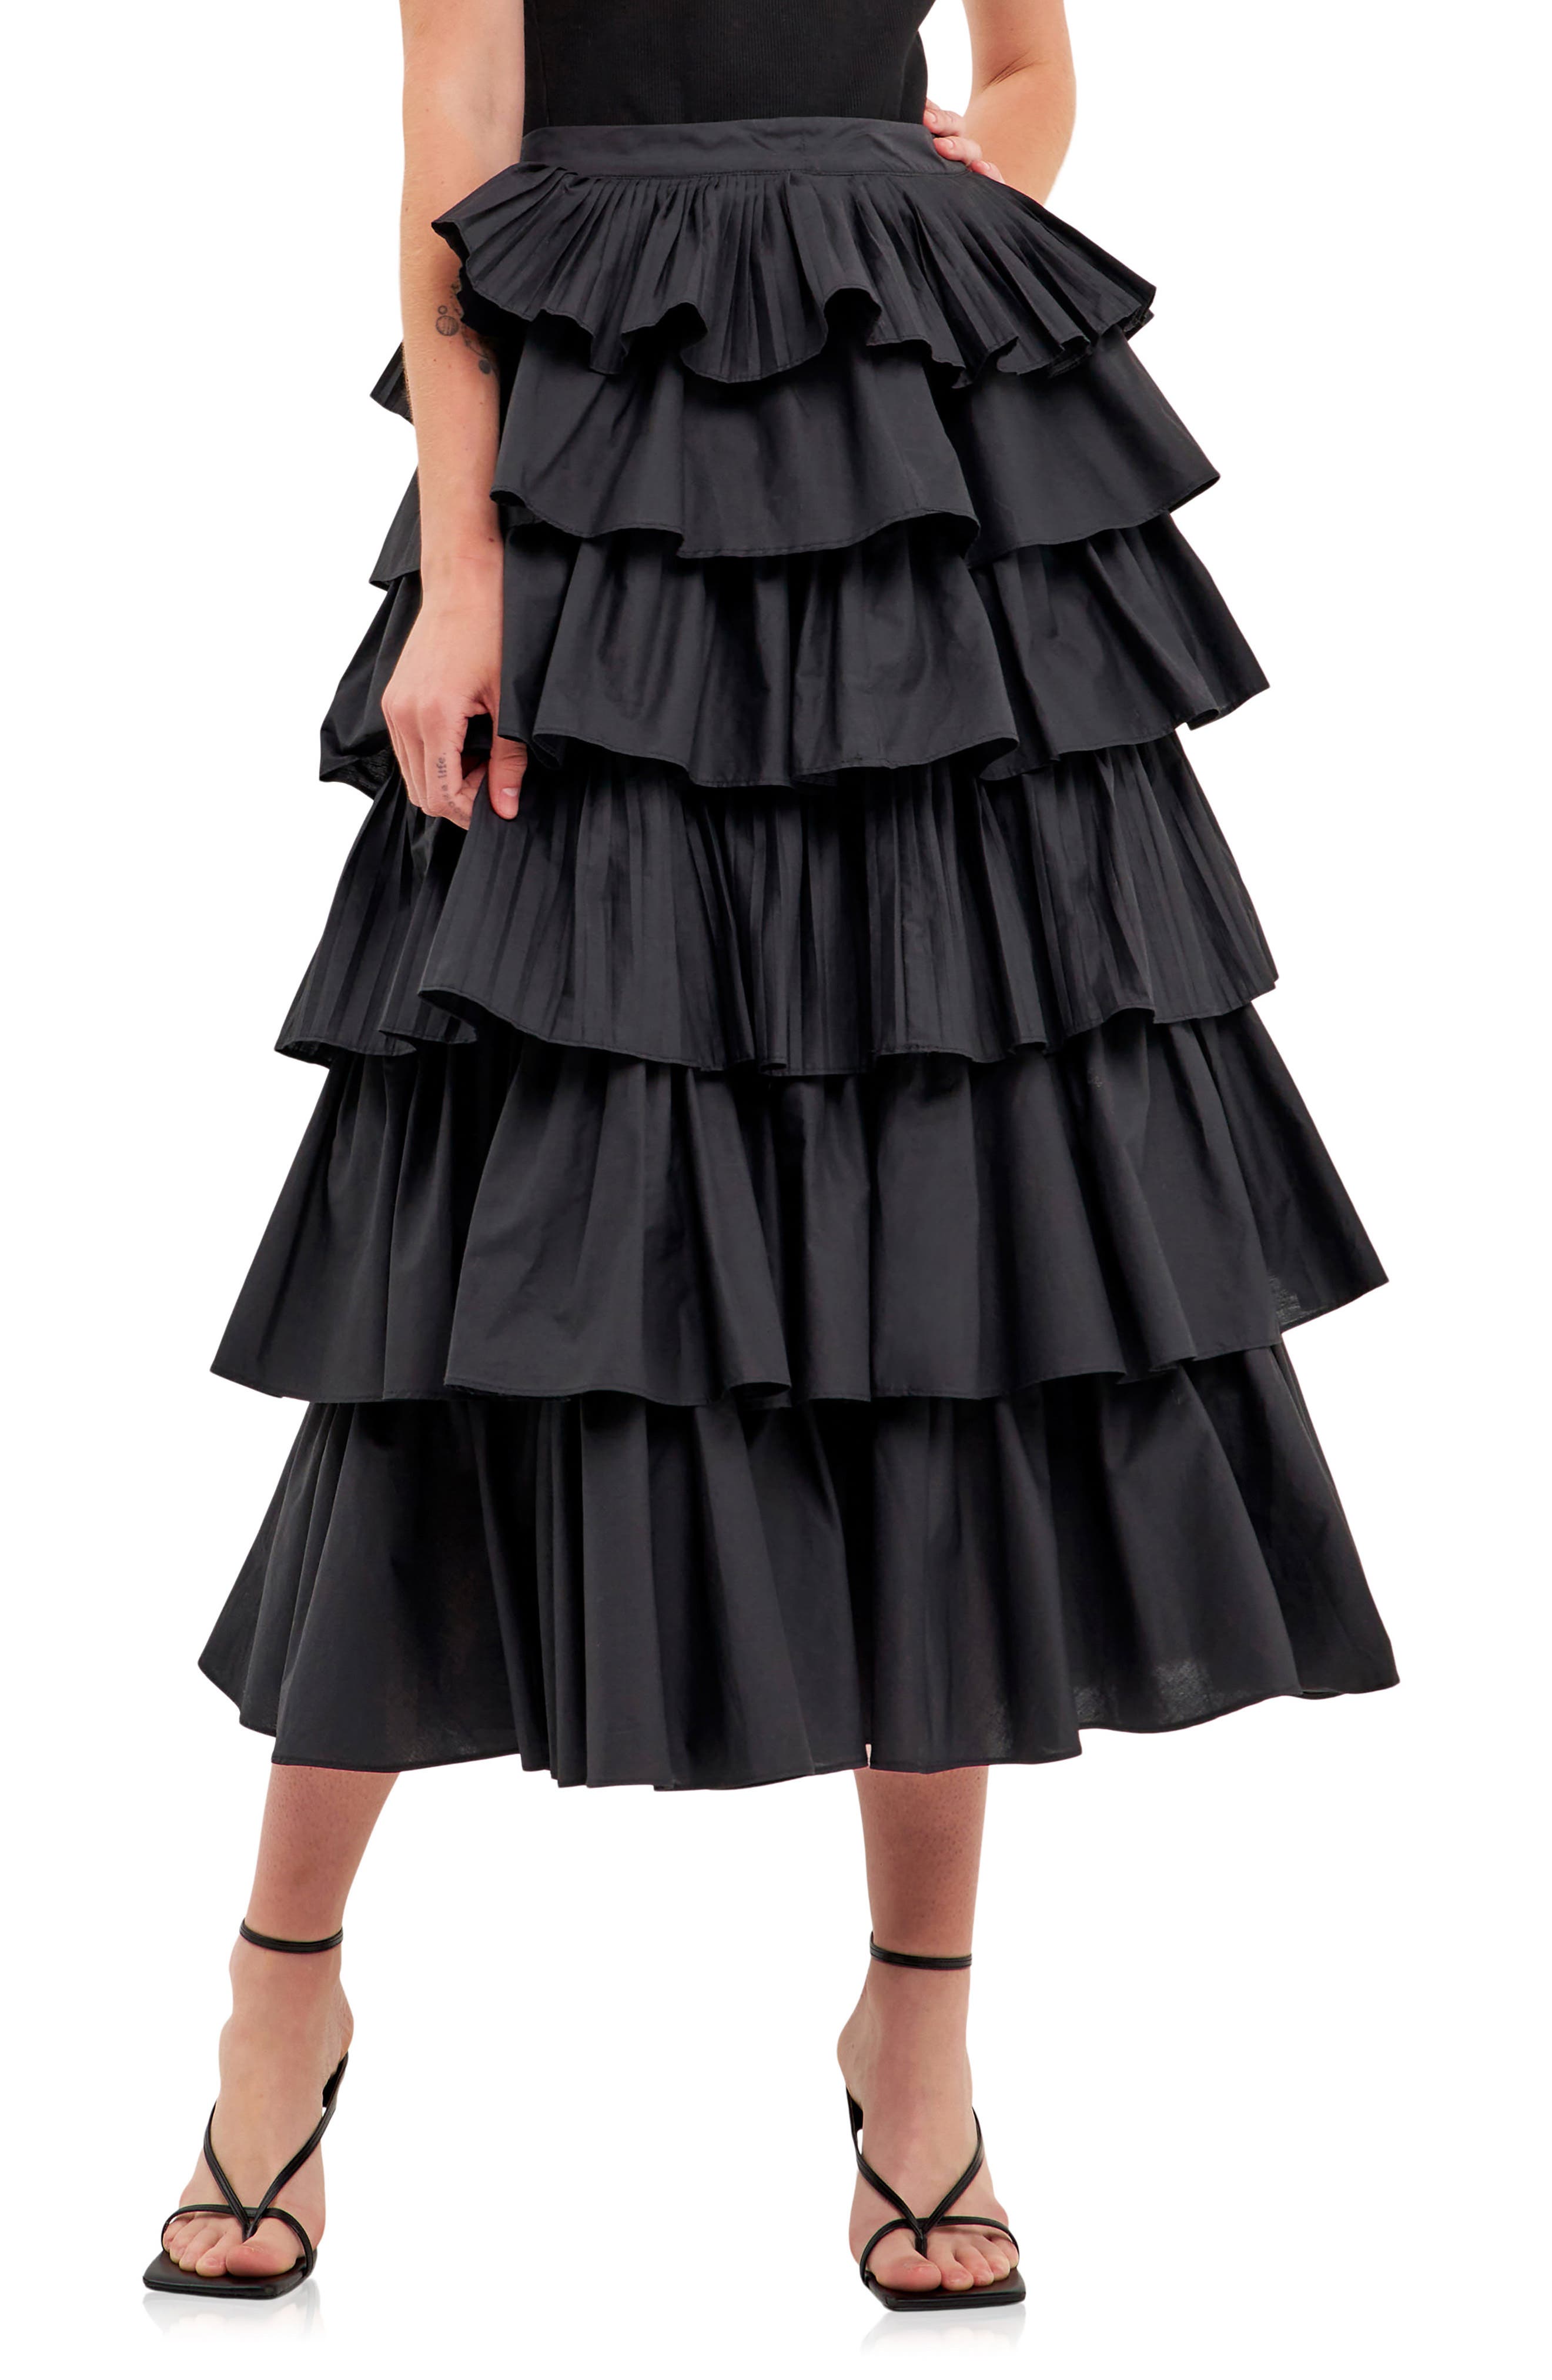 Black Lace Midi Skirt 8 10 12 14 16 18 Lined Elasticated Waistband 30" Length 